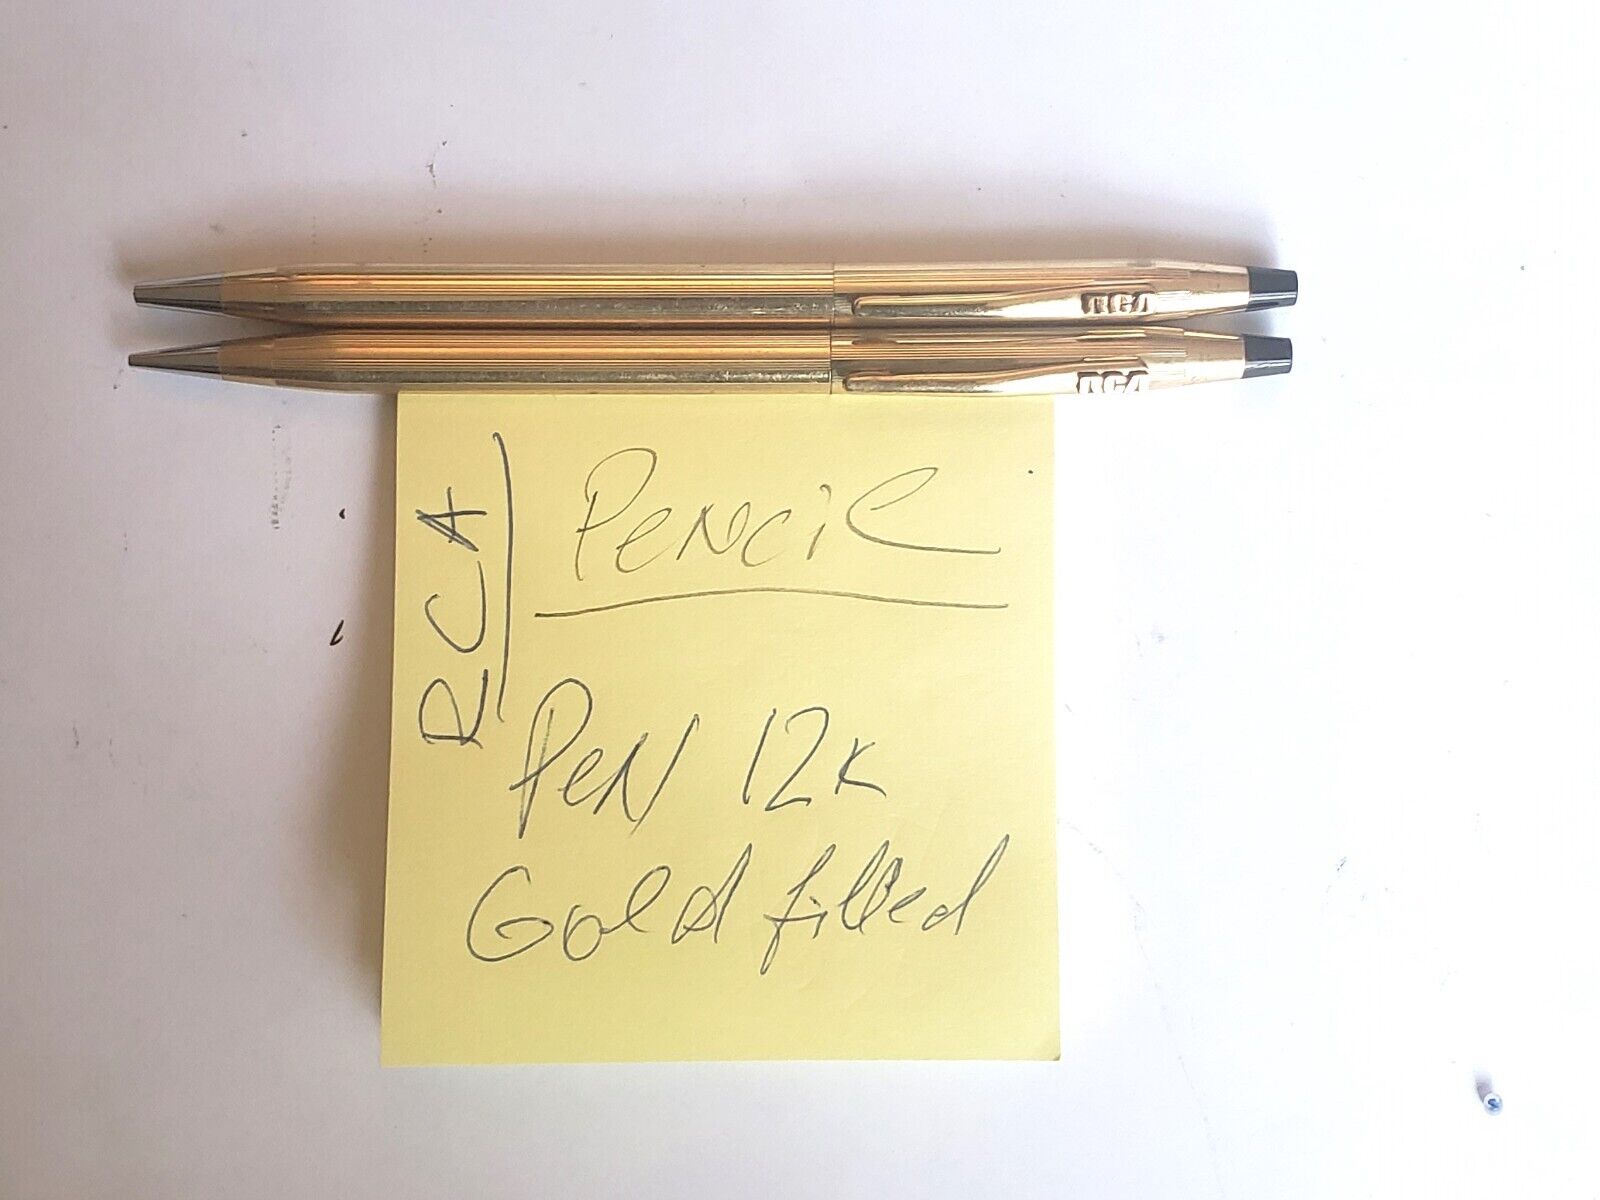 Vtg Cross 12 K Gold Filled Pen & Pencil Set - Made For RCA-works - Executive P38